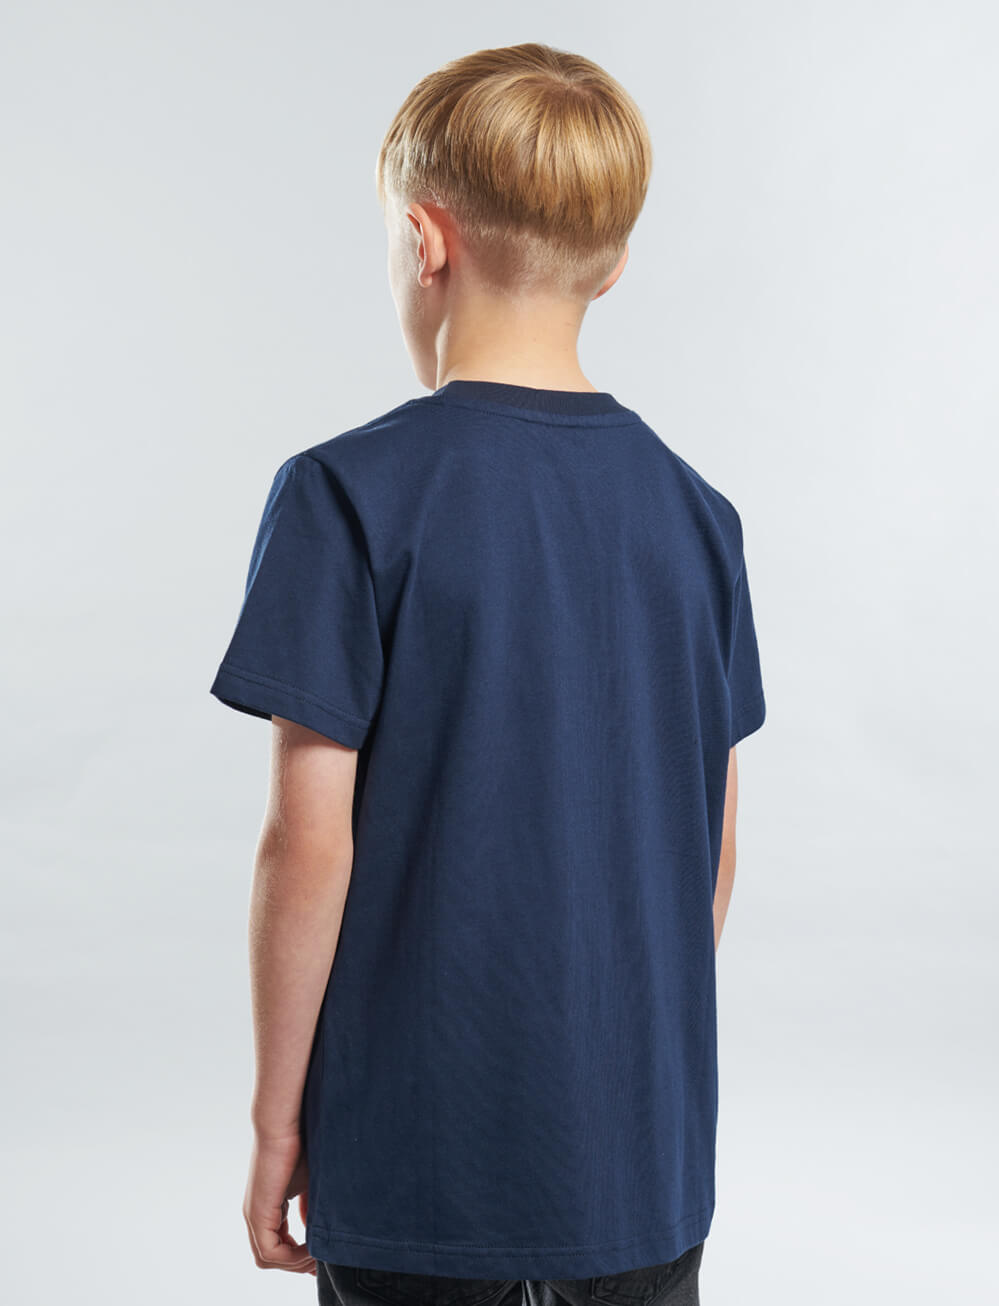 Official Tottenham Kids Graphic T-Shirt - Navy - The World Football Store